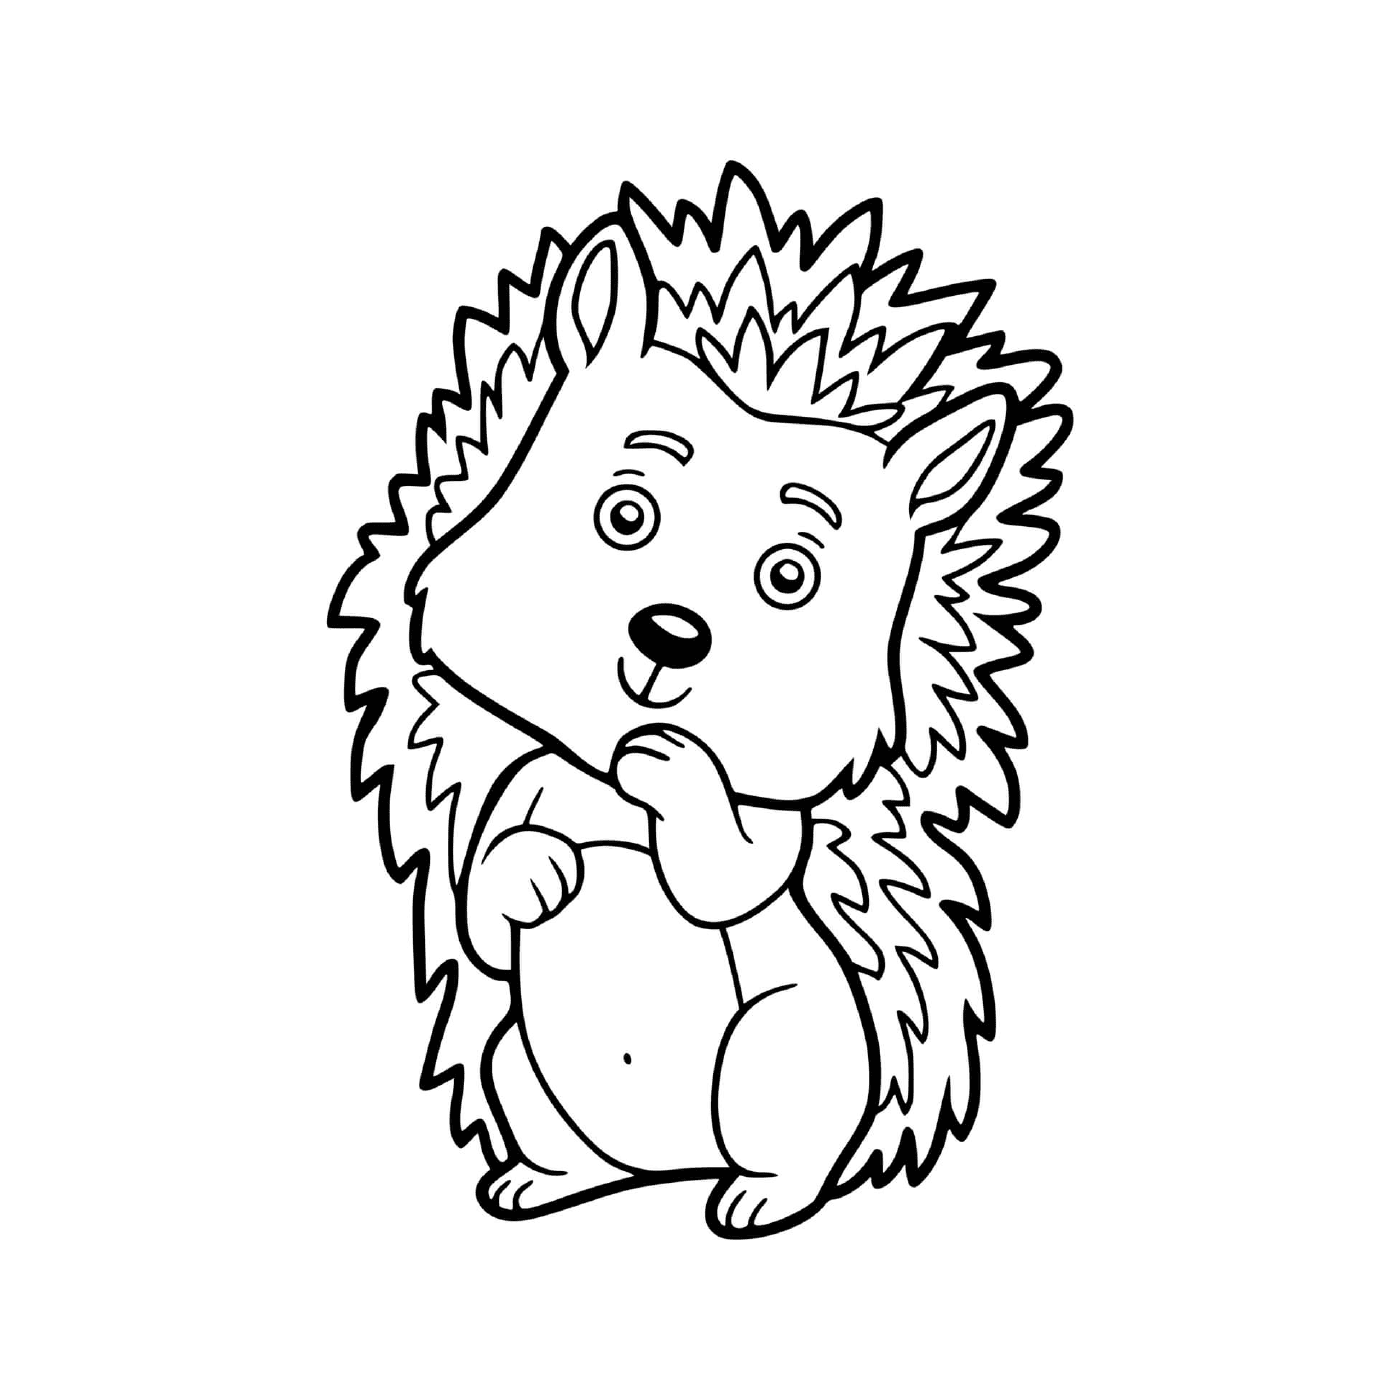  A shy and cute hedgehog 